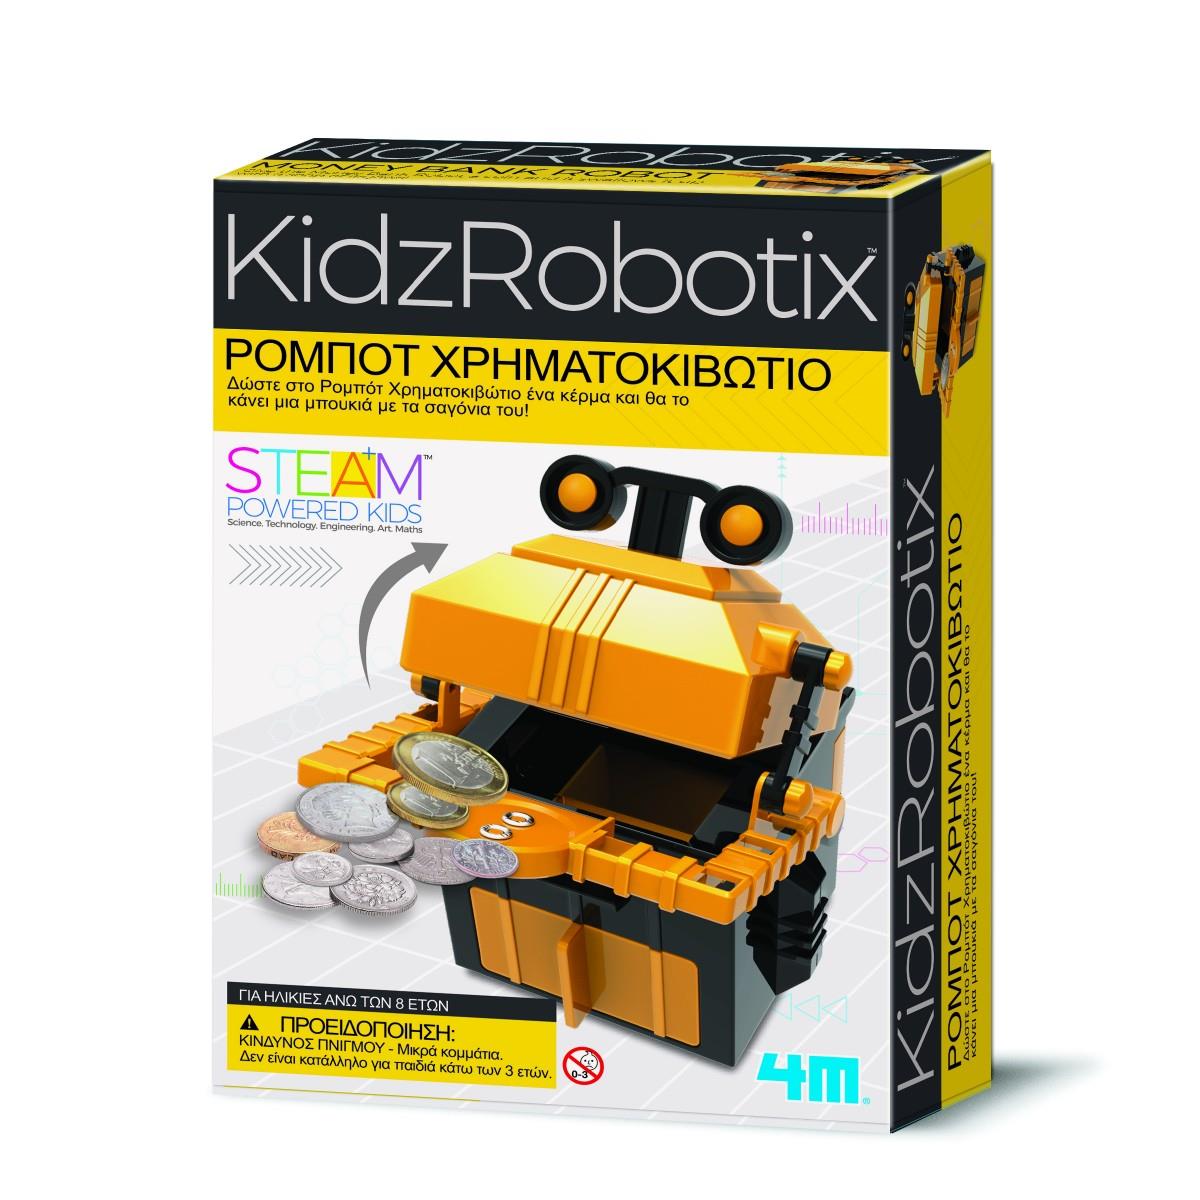 4M - Kidzrobotix, Κατασκευή Ρομπότ Χρηματοκιβώτιο 00-03422